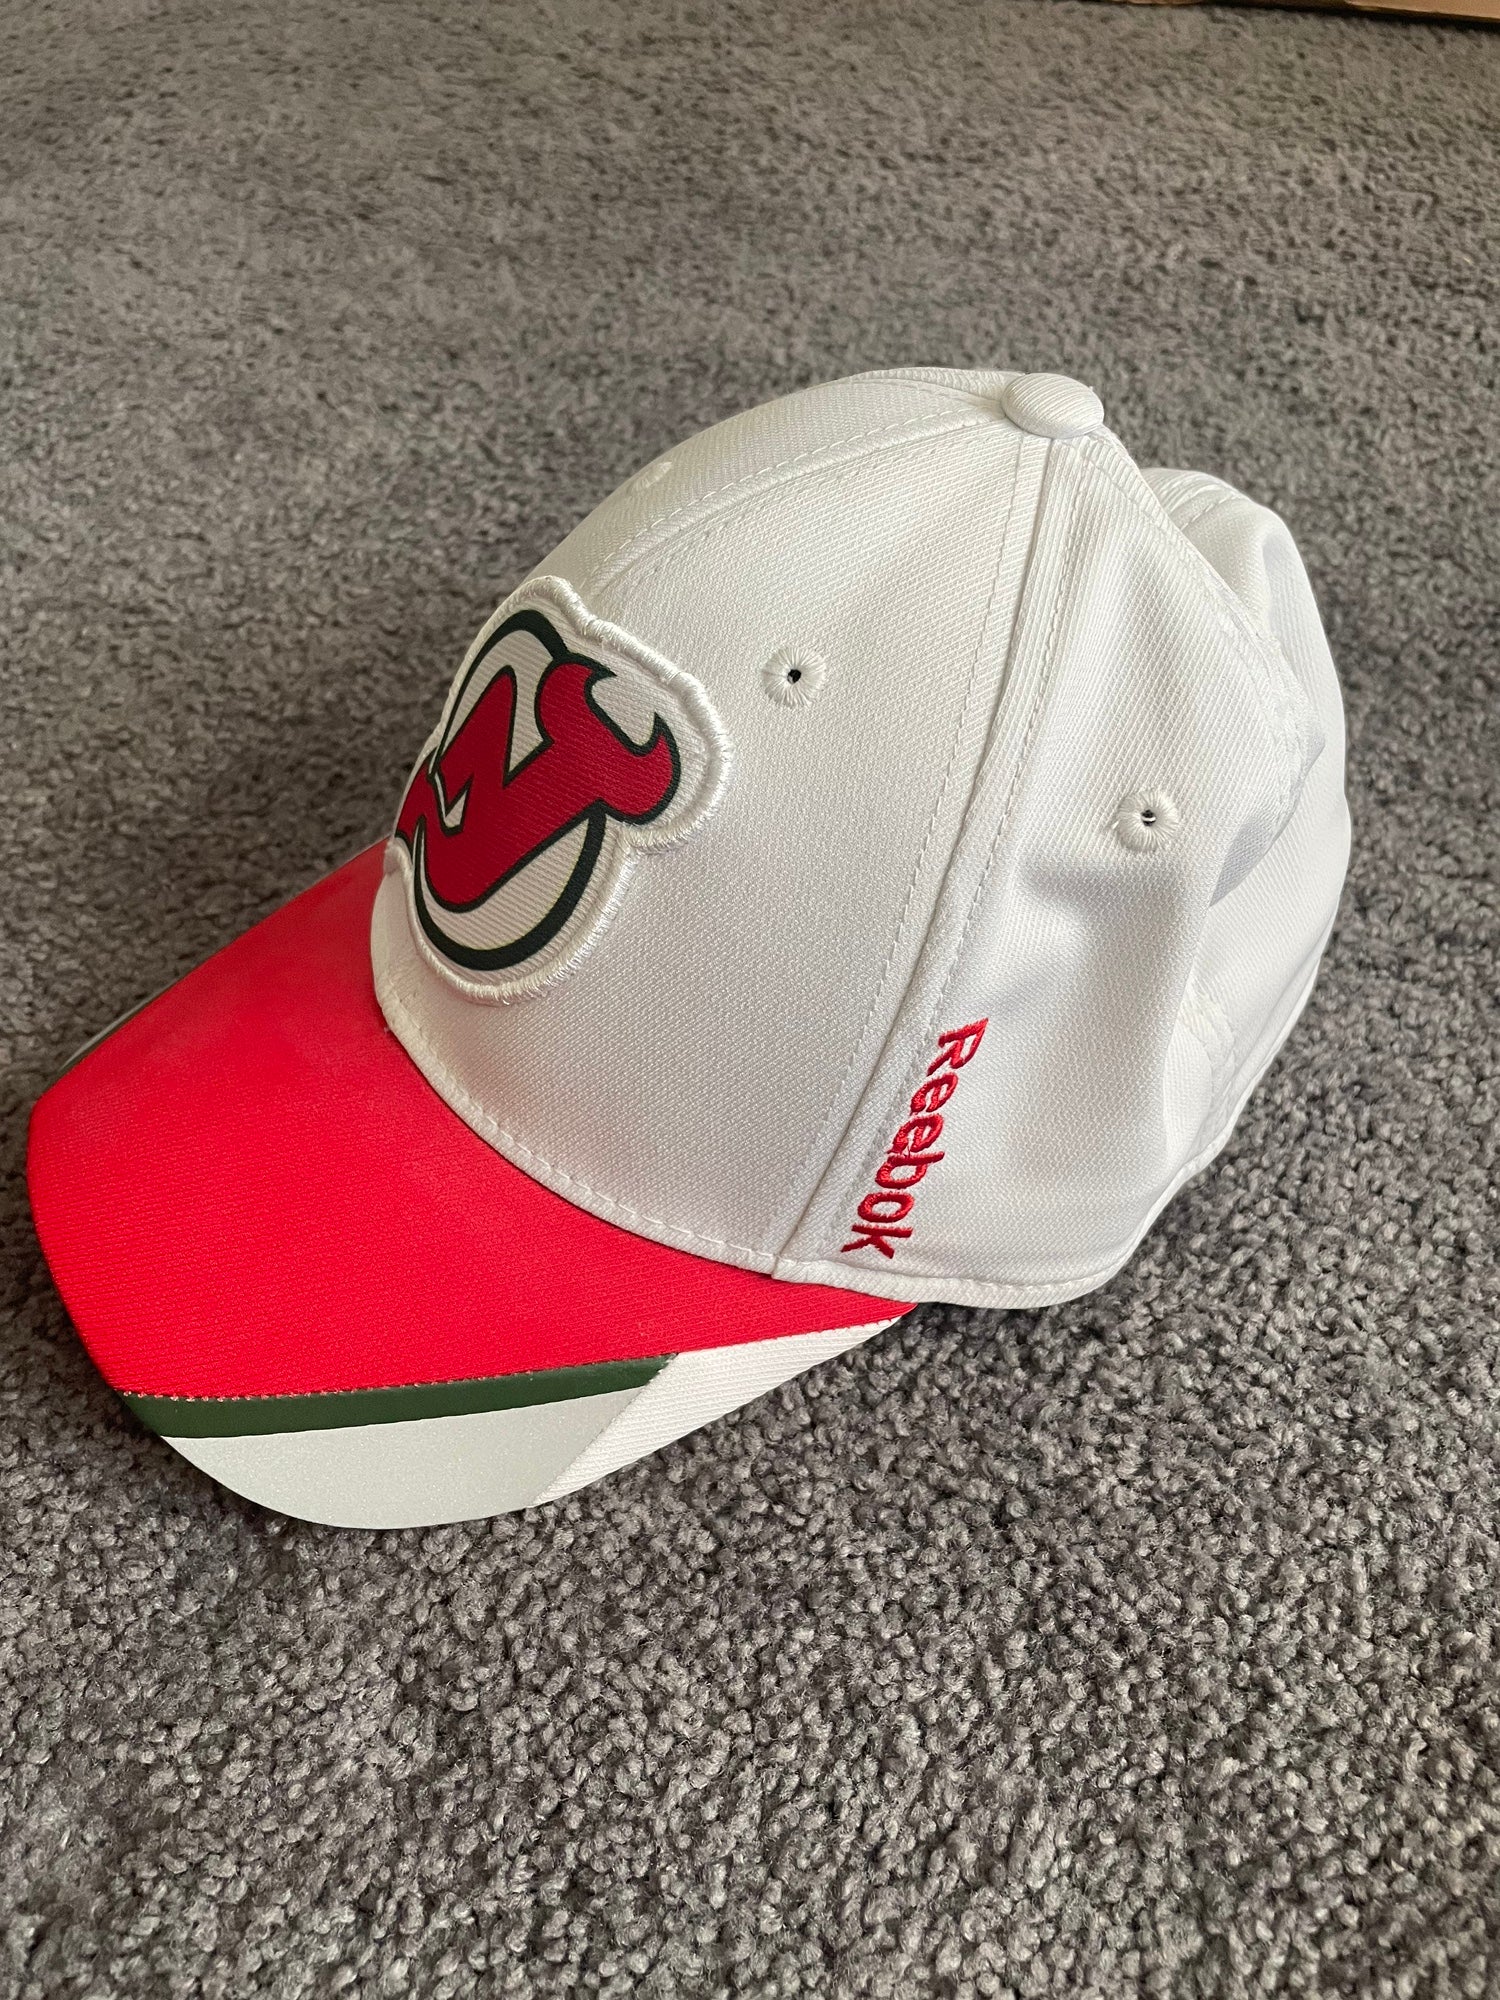  Reebok New Jersey Devils White Basic Logo Slouch Hat